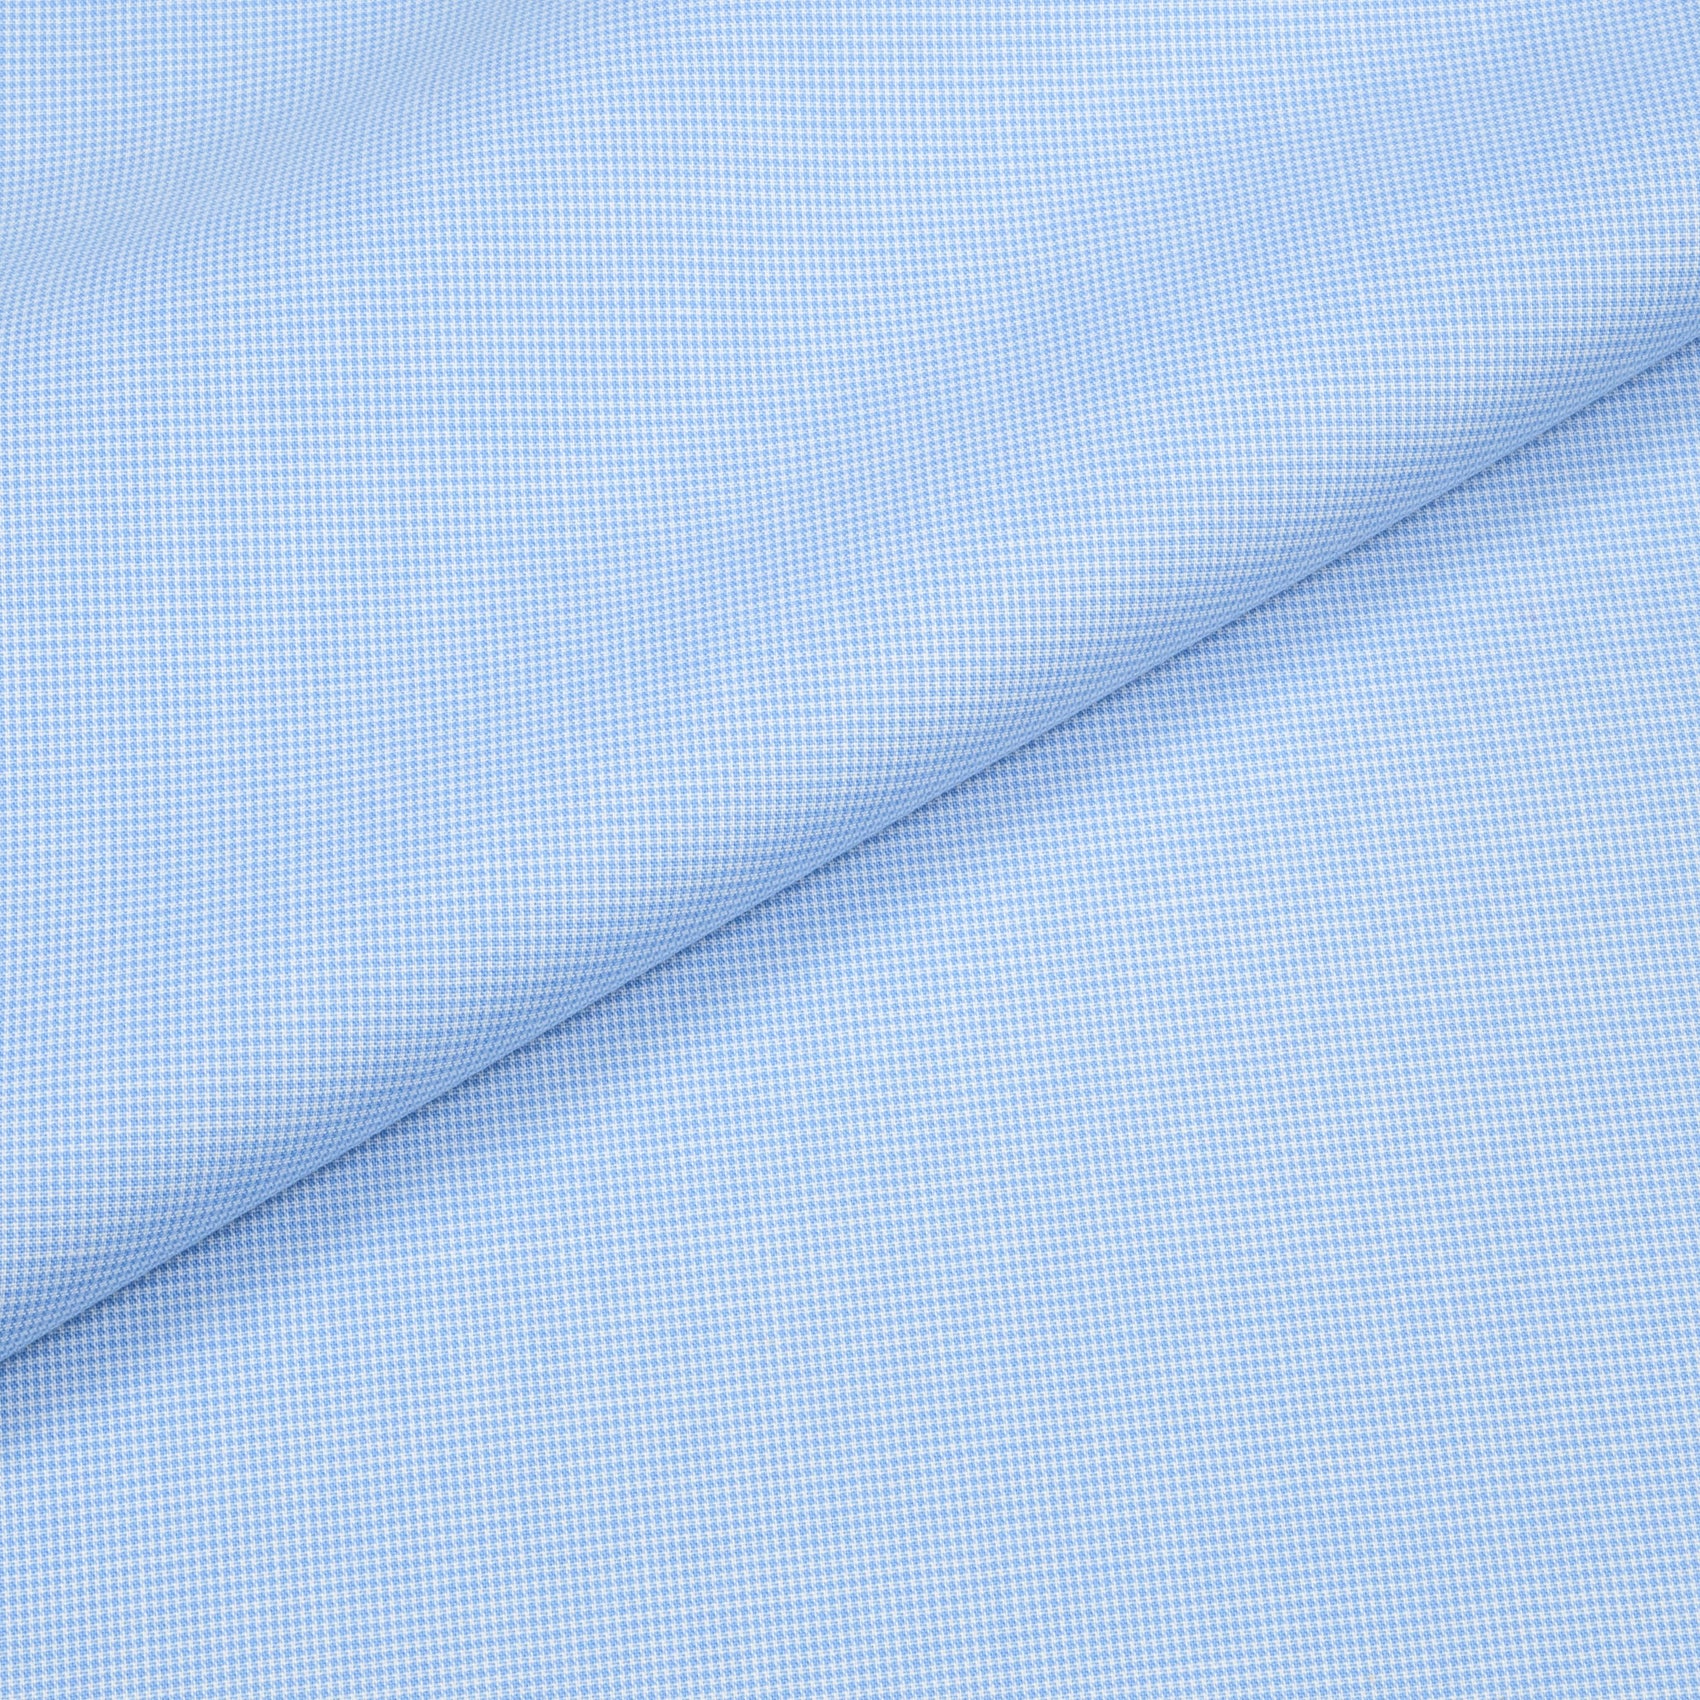 Blue Nailshead Cotton Shirt